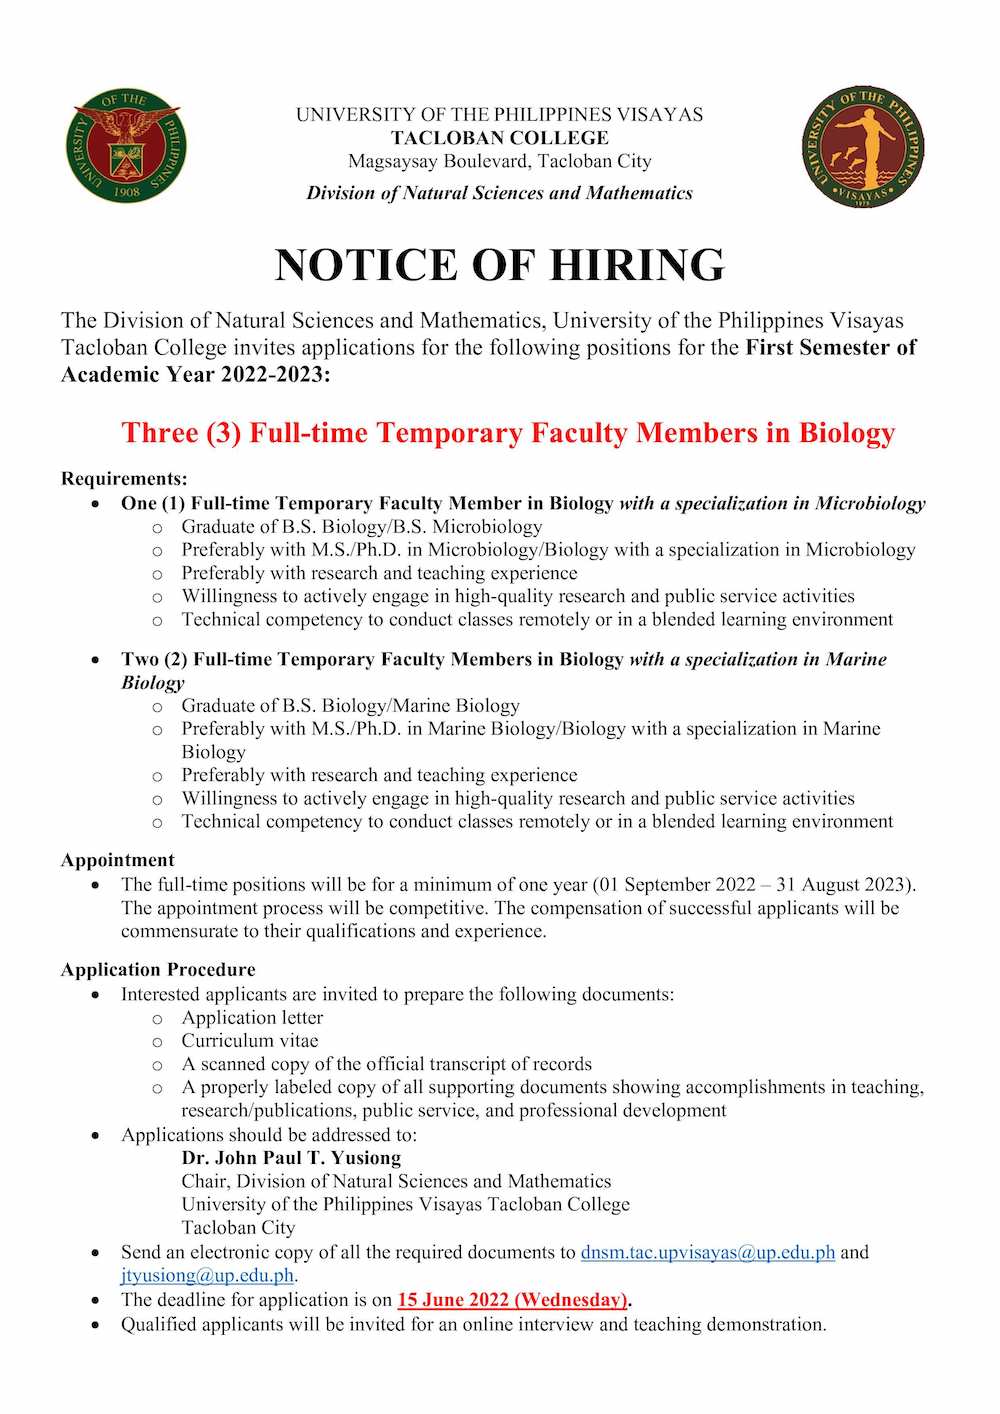 hiring upvtc bio faculty 0622